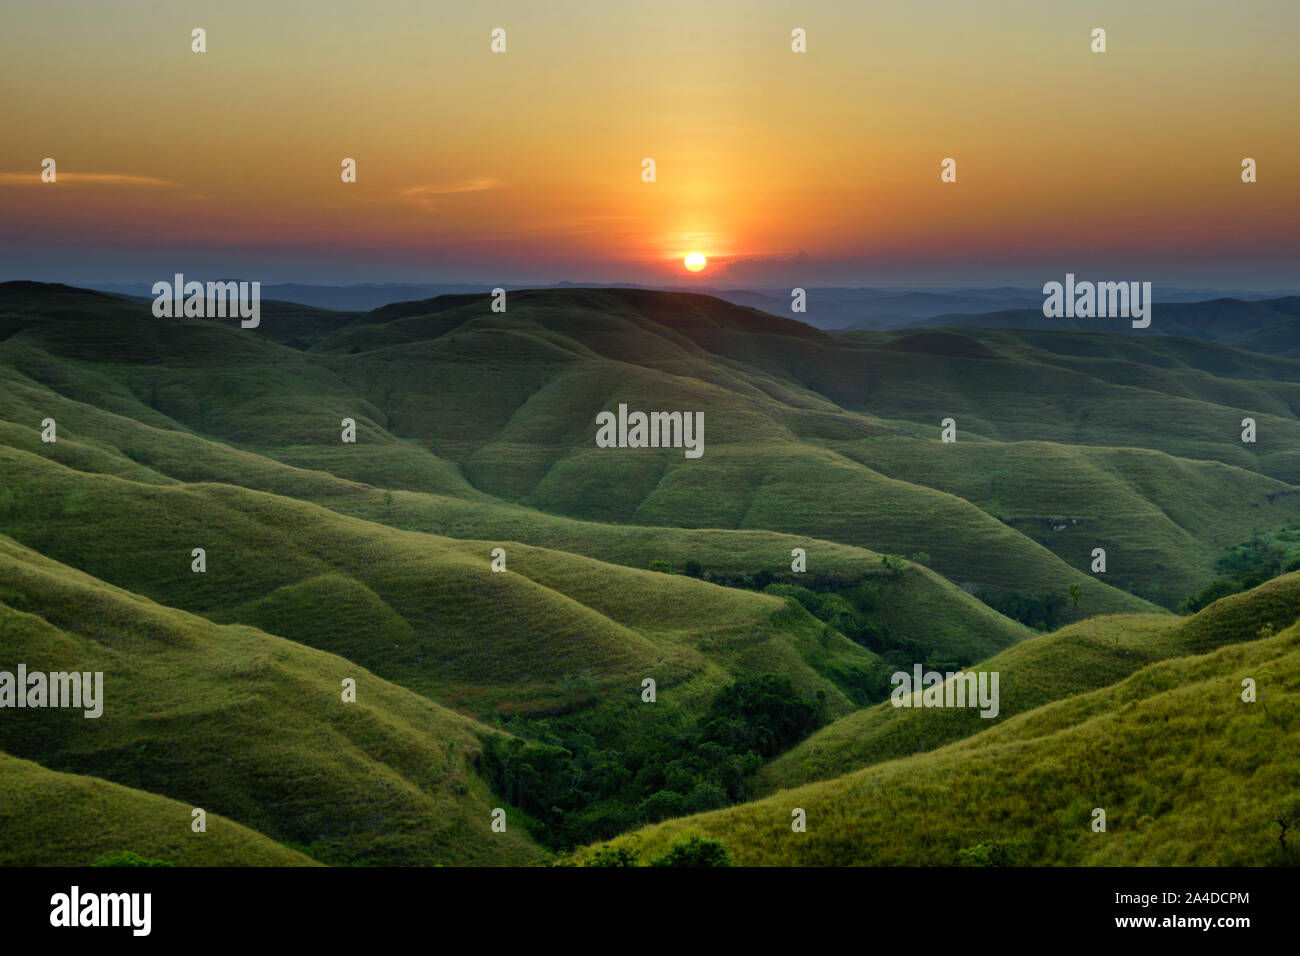 Rolling landscape at sunset, Wairinding Hill, Waingapu, East Sumba, East Nusa Tengara, Indonesia Stock Photo